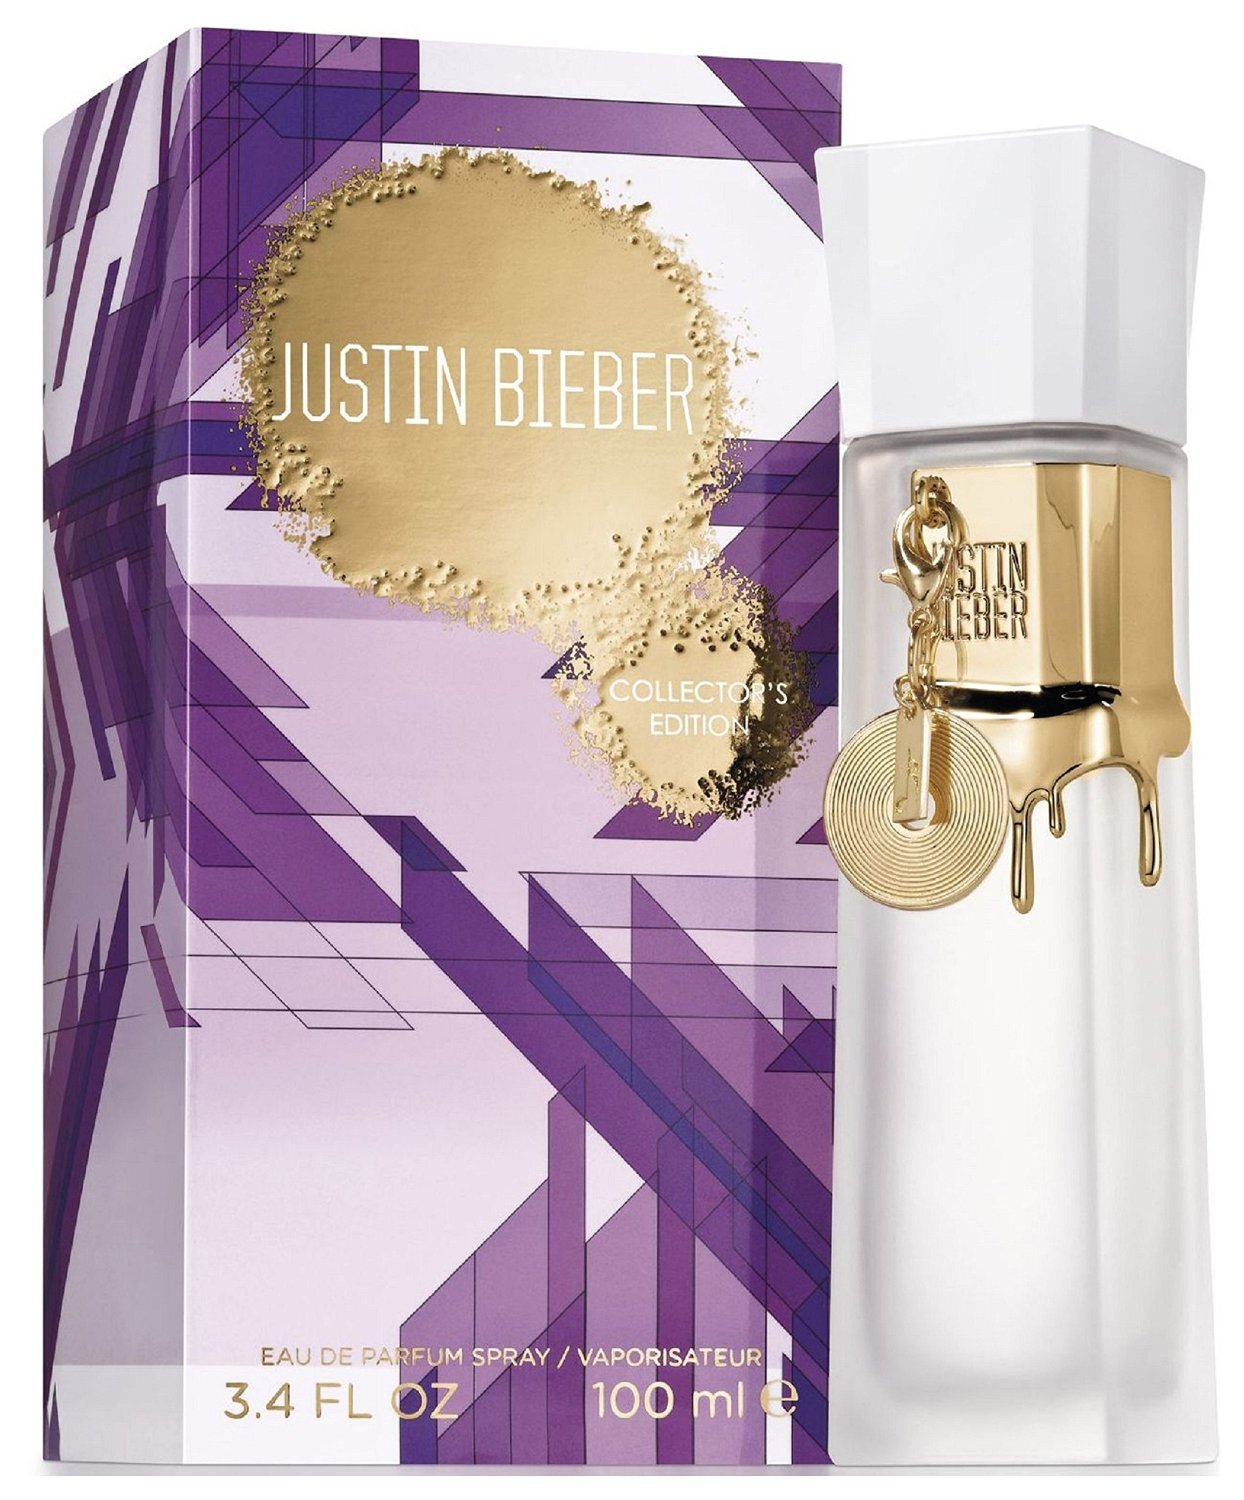 JUSTIN BIEBER - Justin Bieber Collector para mujer / 100 ml Eau De Parfum Spray